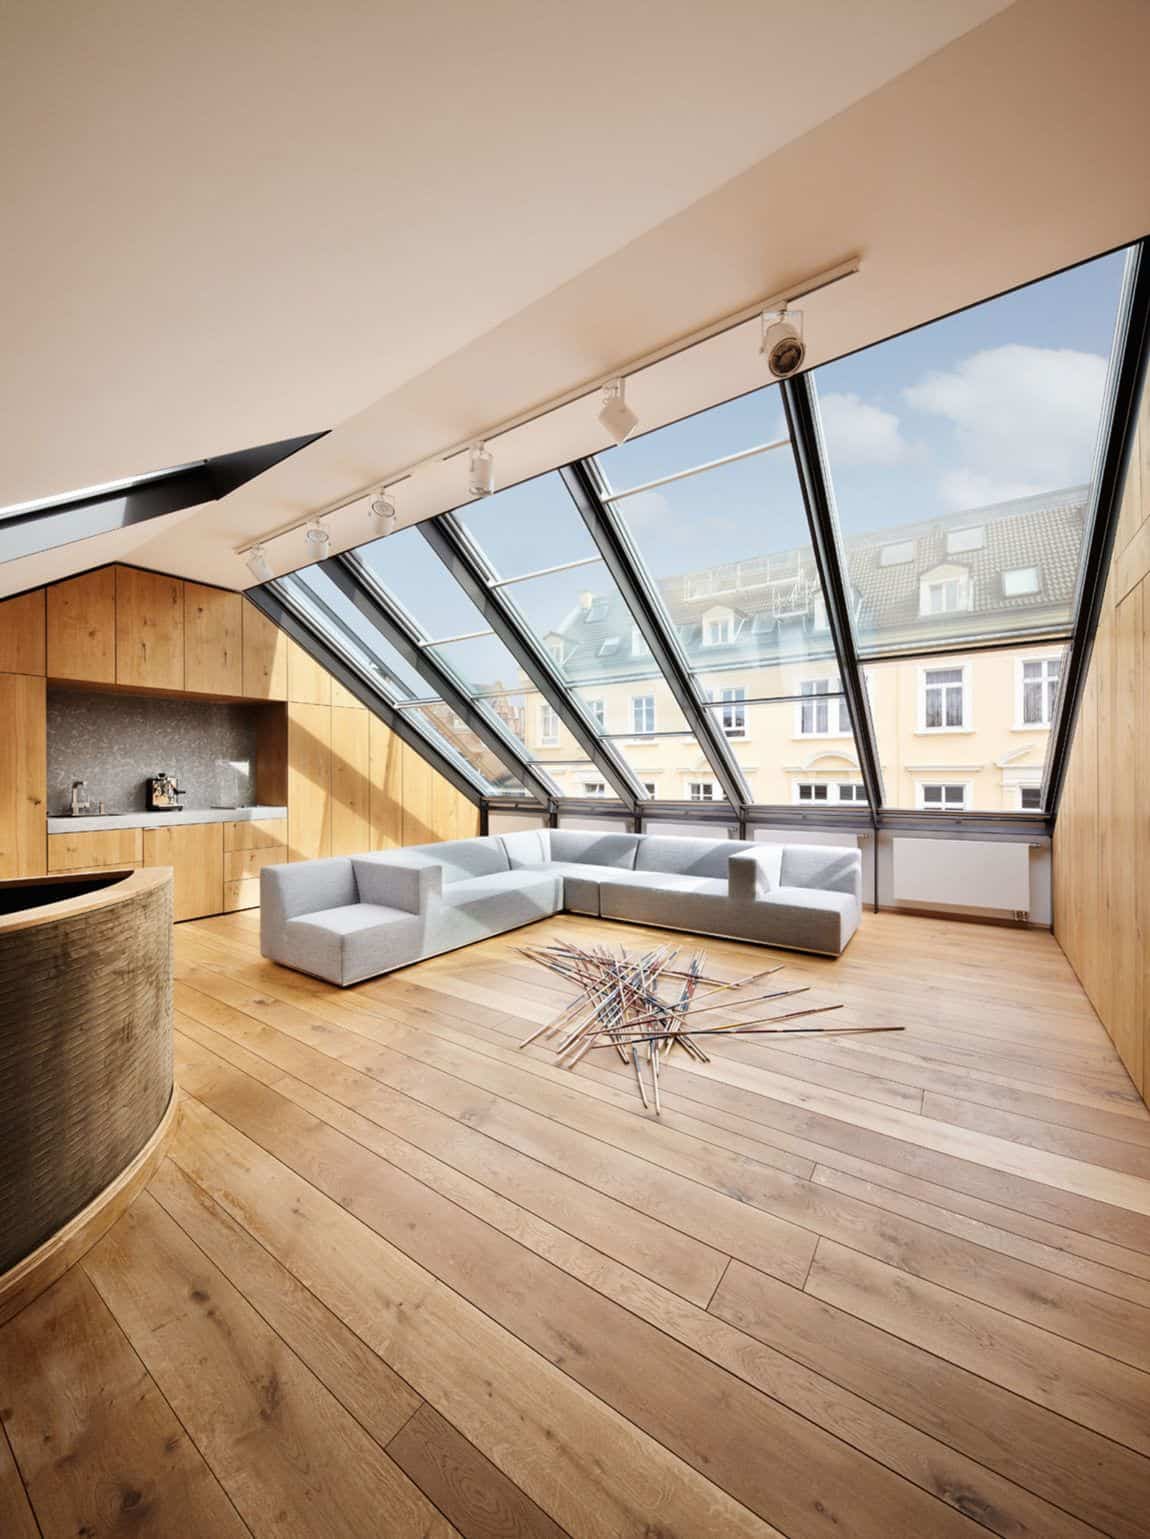 A classic skylight window with sofas